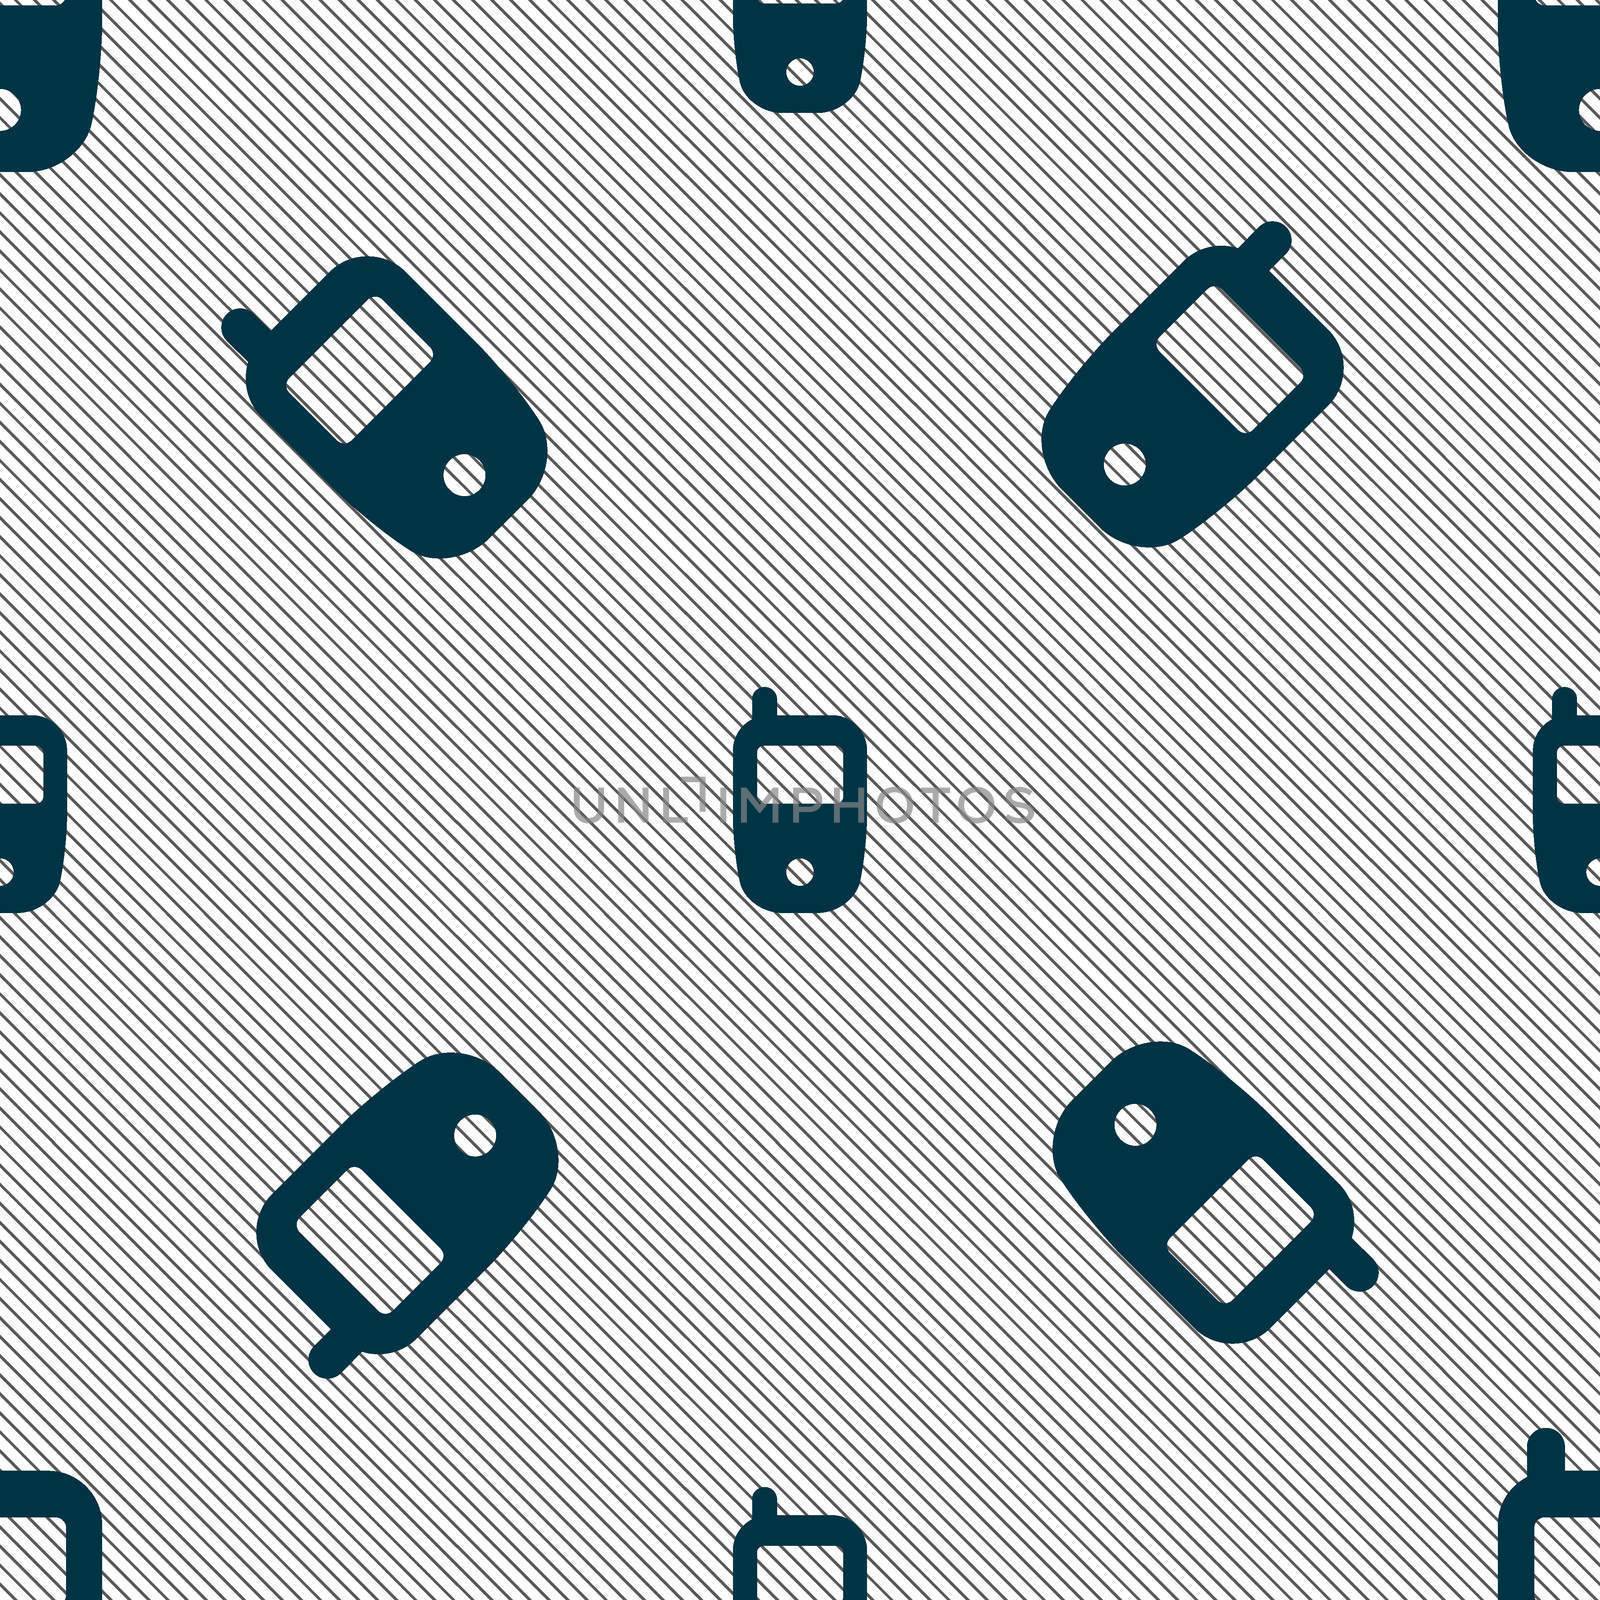 Mobile telecommunications technology symbol. Seamless pattern with geometric texture. illustration